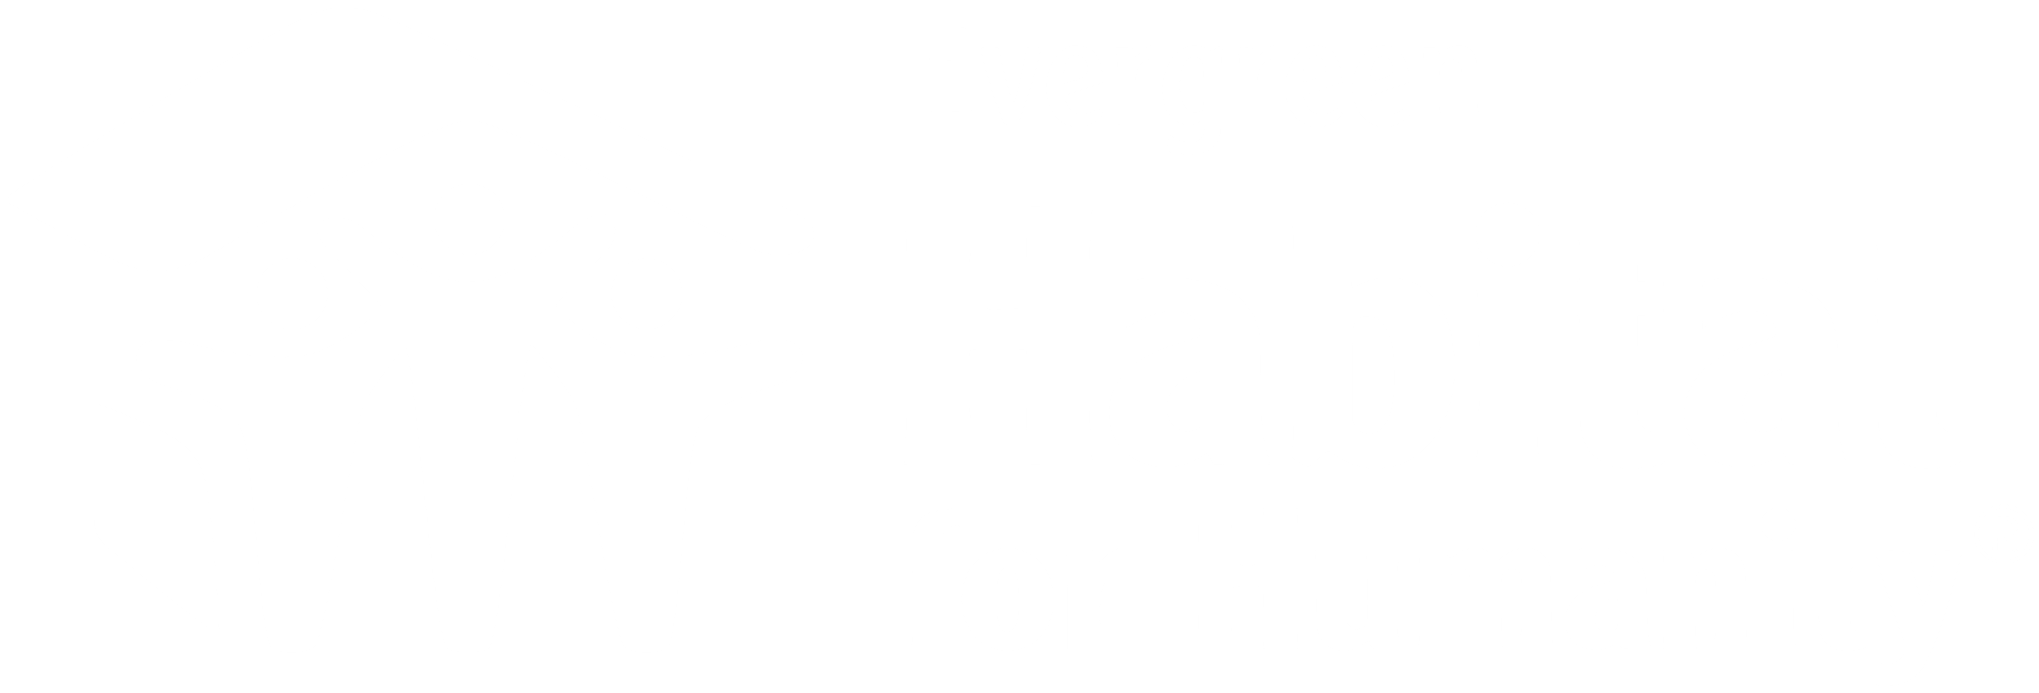 Evergreen Habitat For Humanity